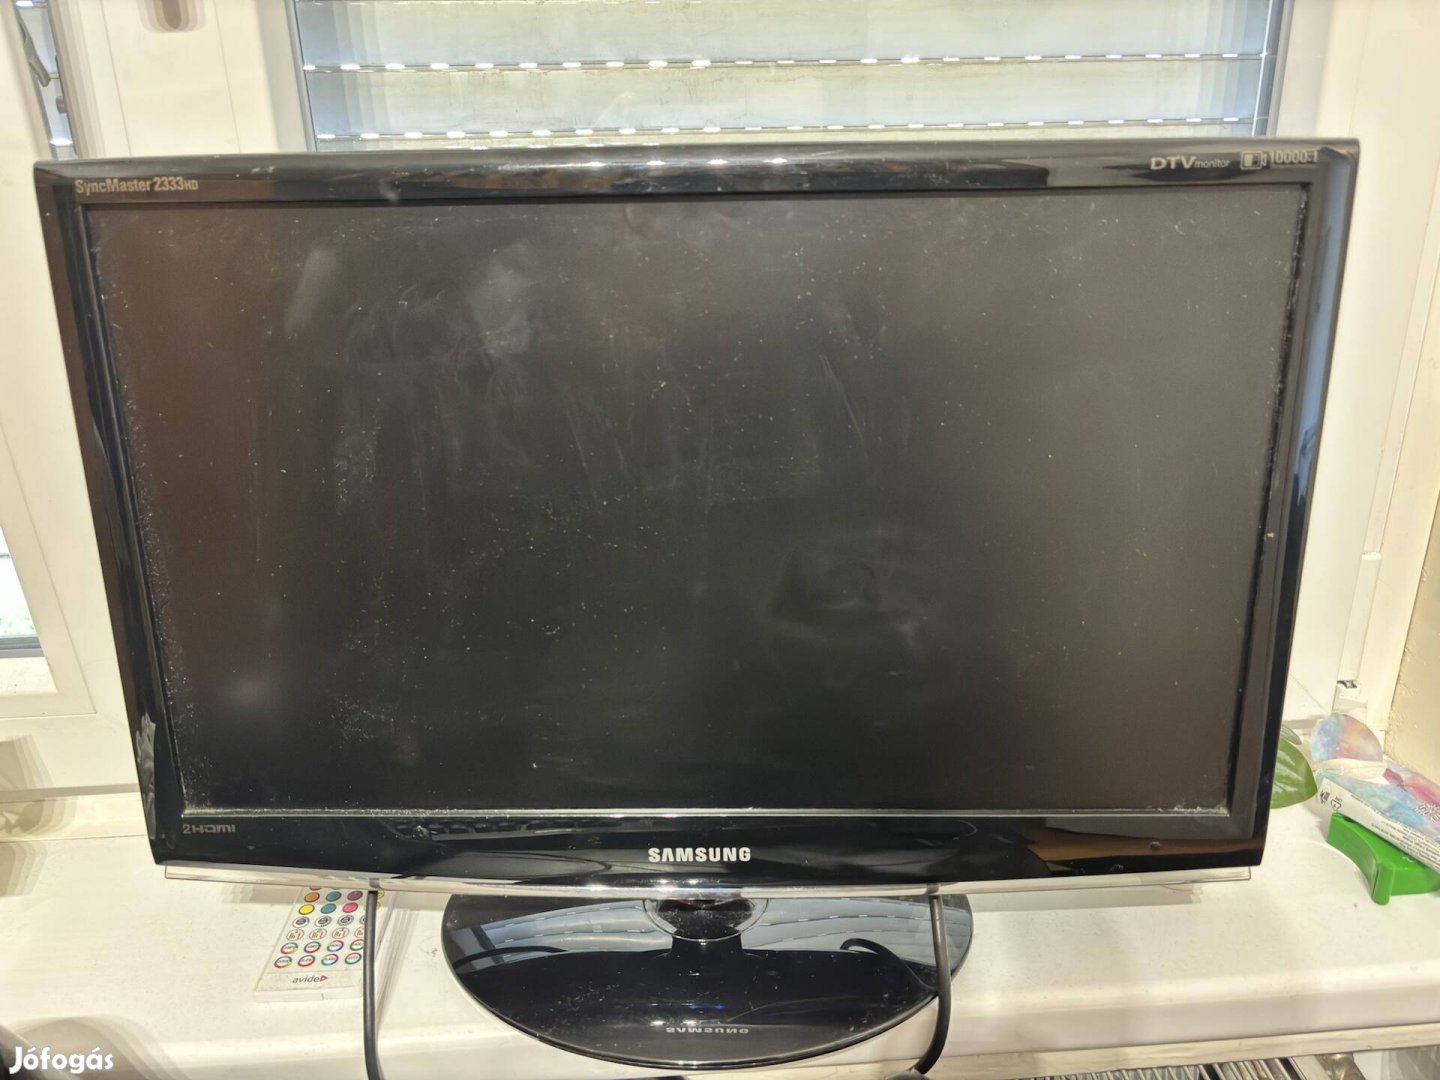 Samsung 2333HD DTV monitor 